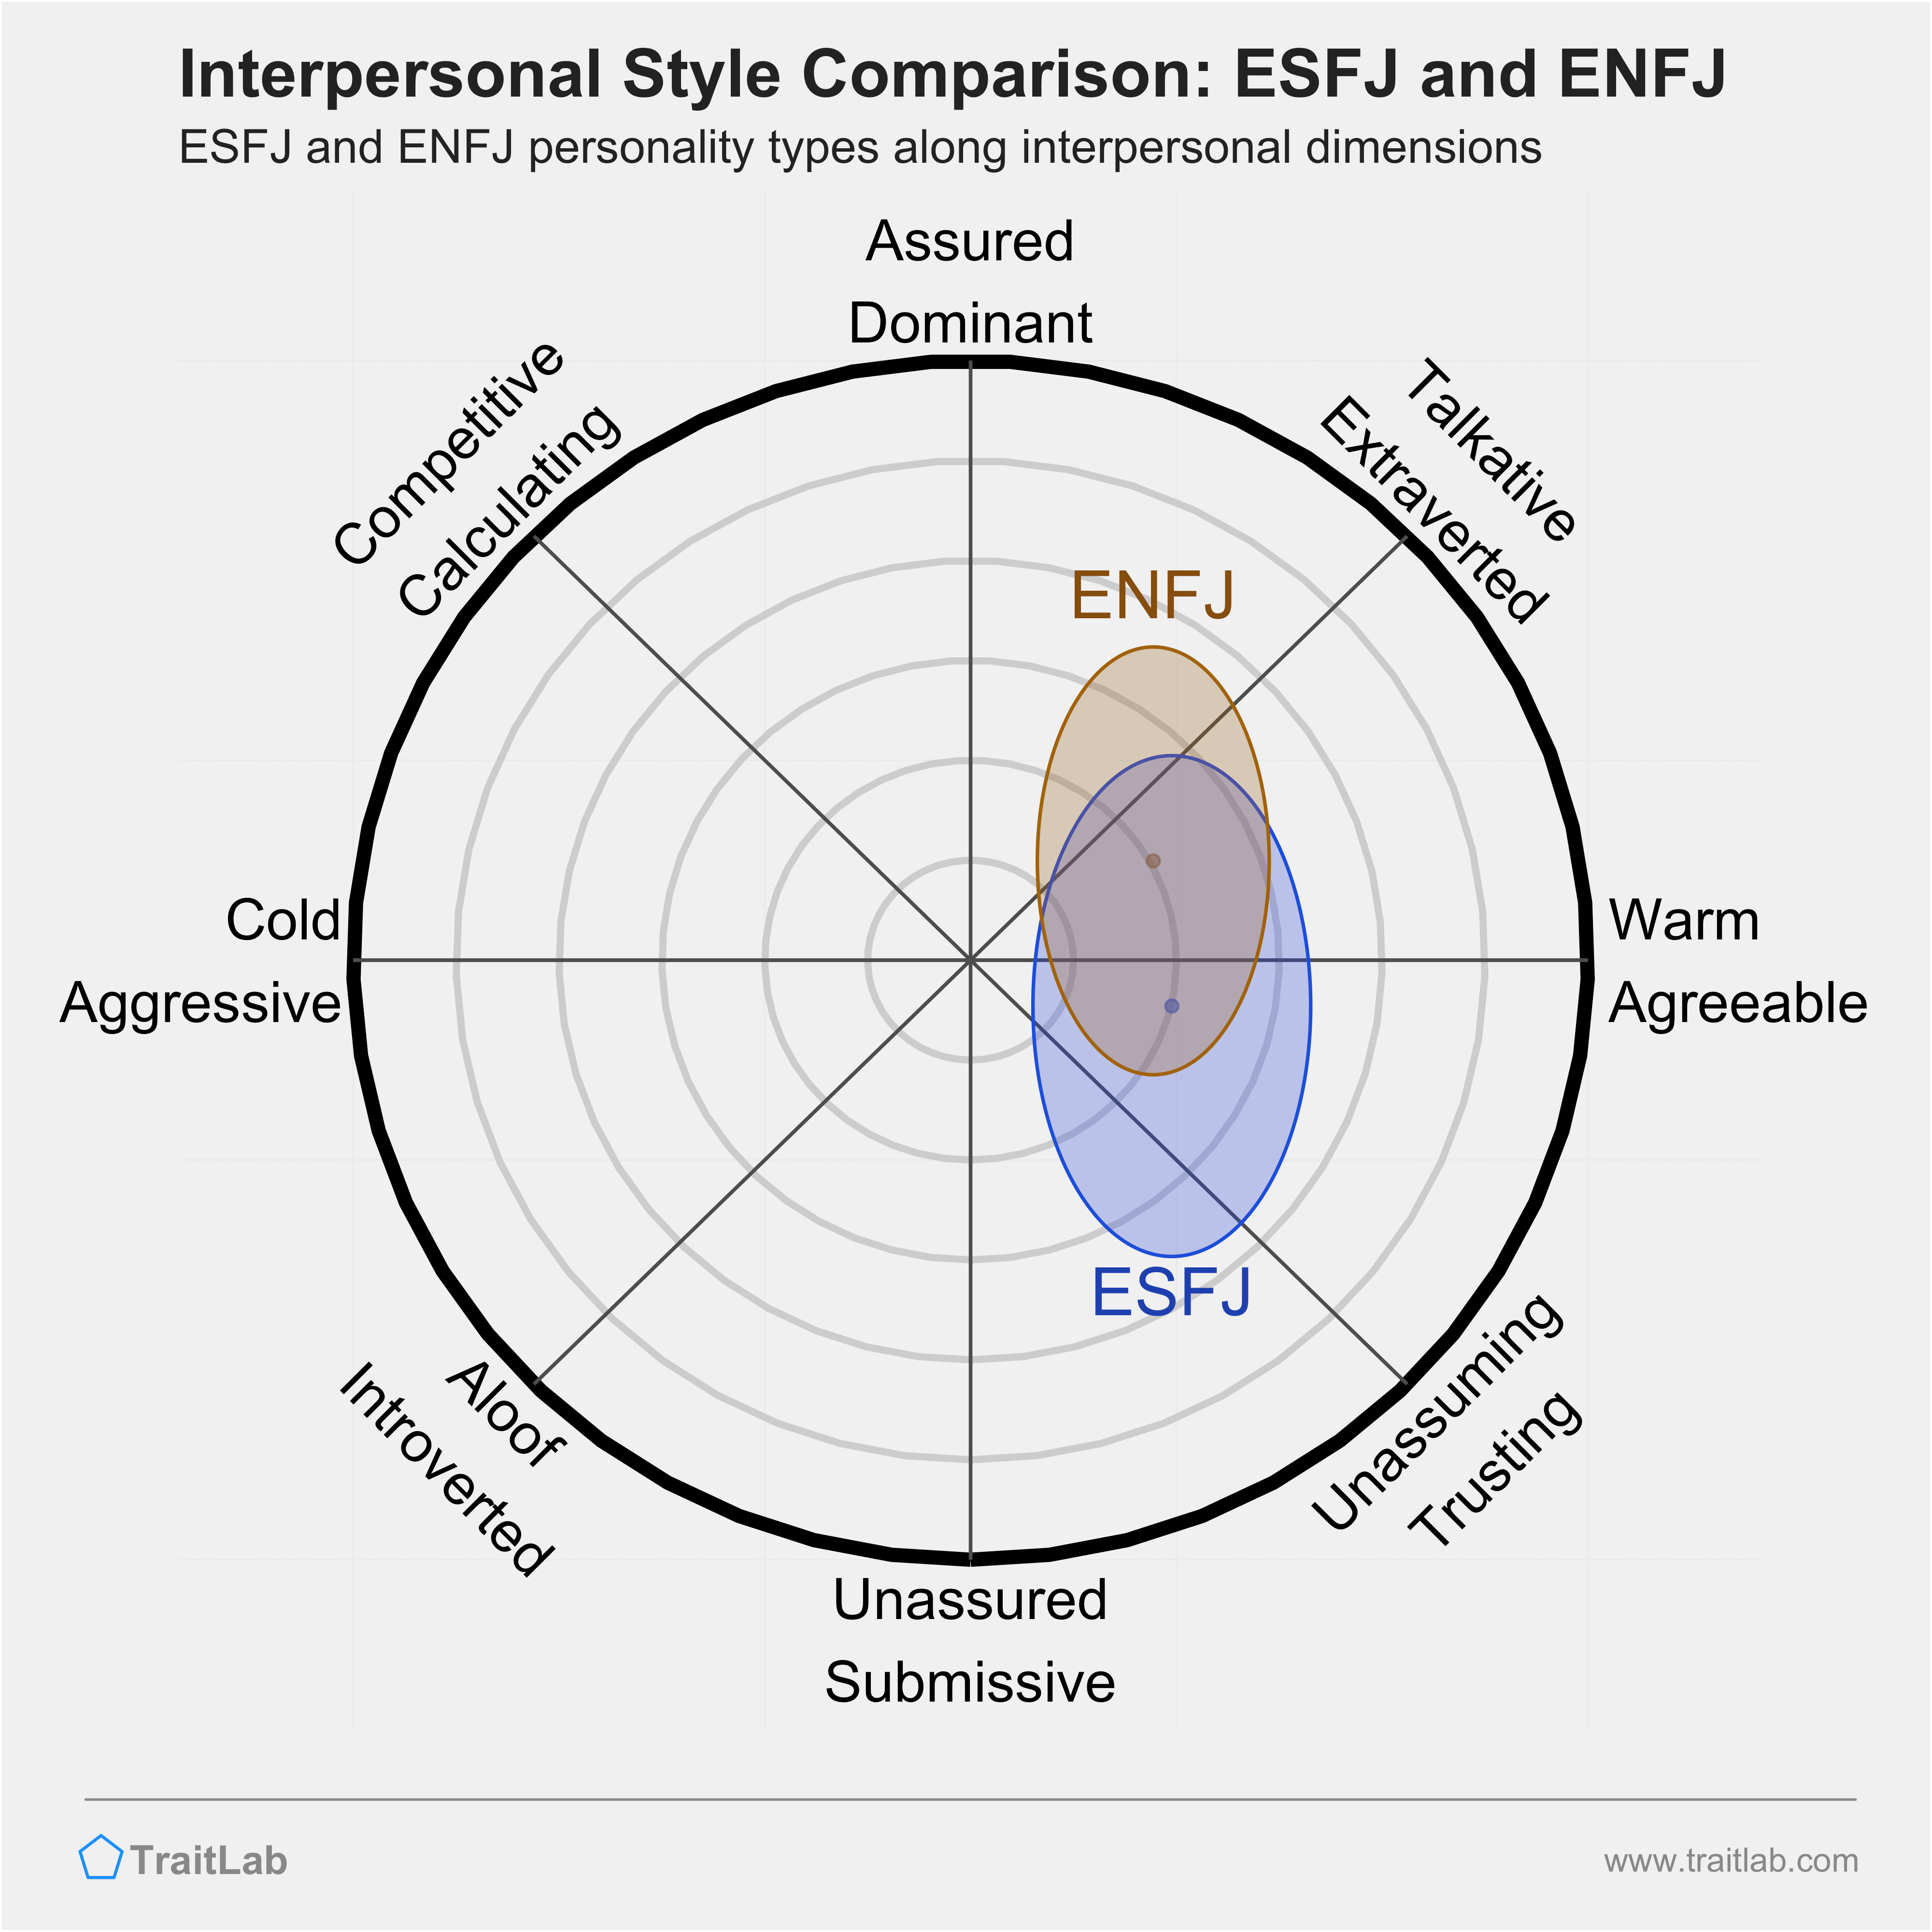 ESFJ and ENFJ comparison across interpersonal dimensions